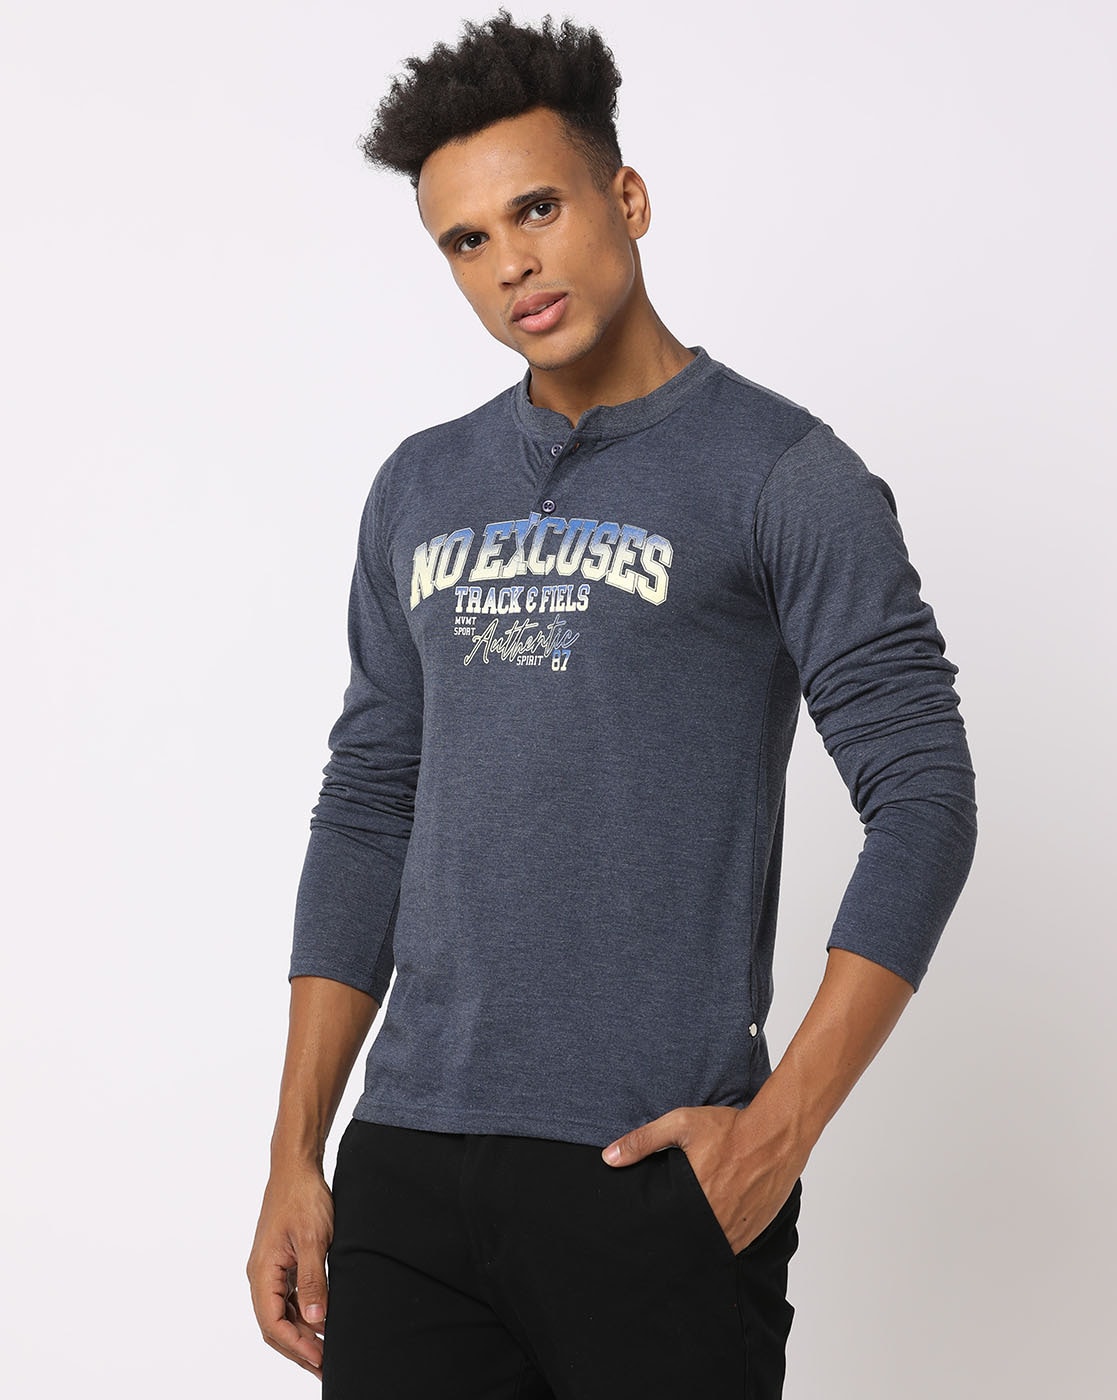 Buy Navy Blue Tshirts for Men by MVMT Online